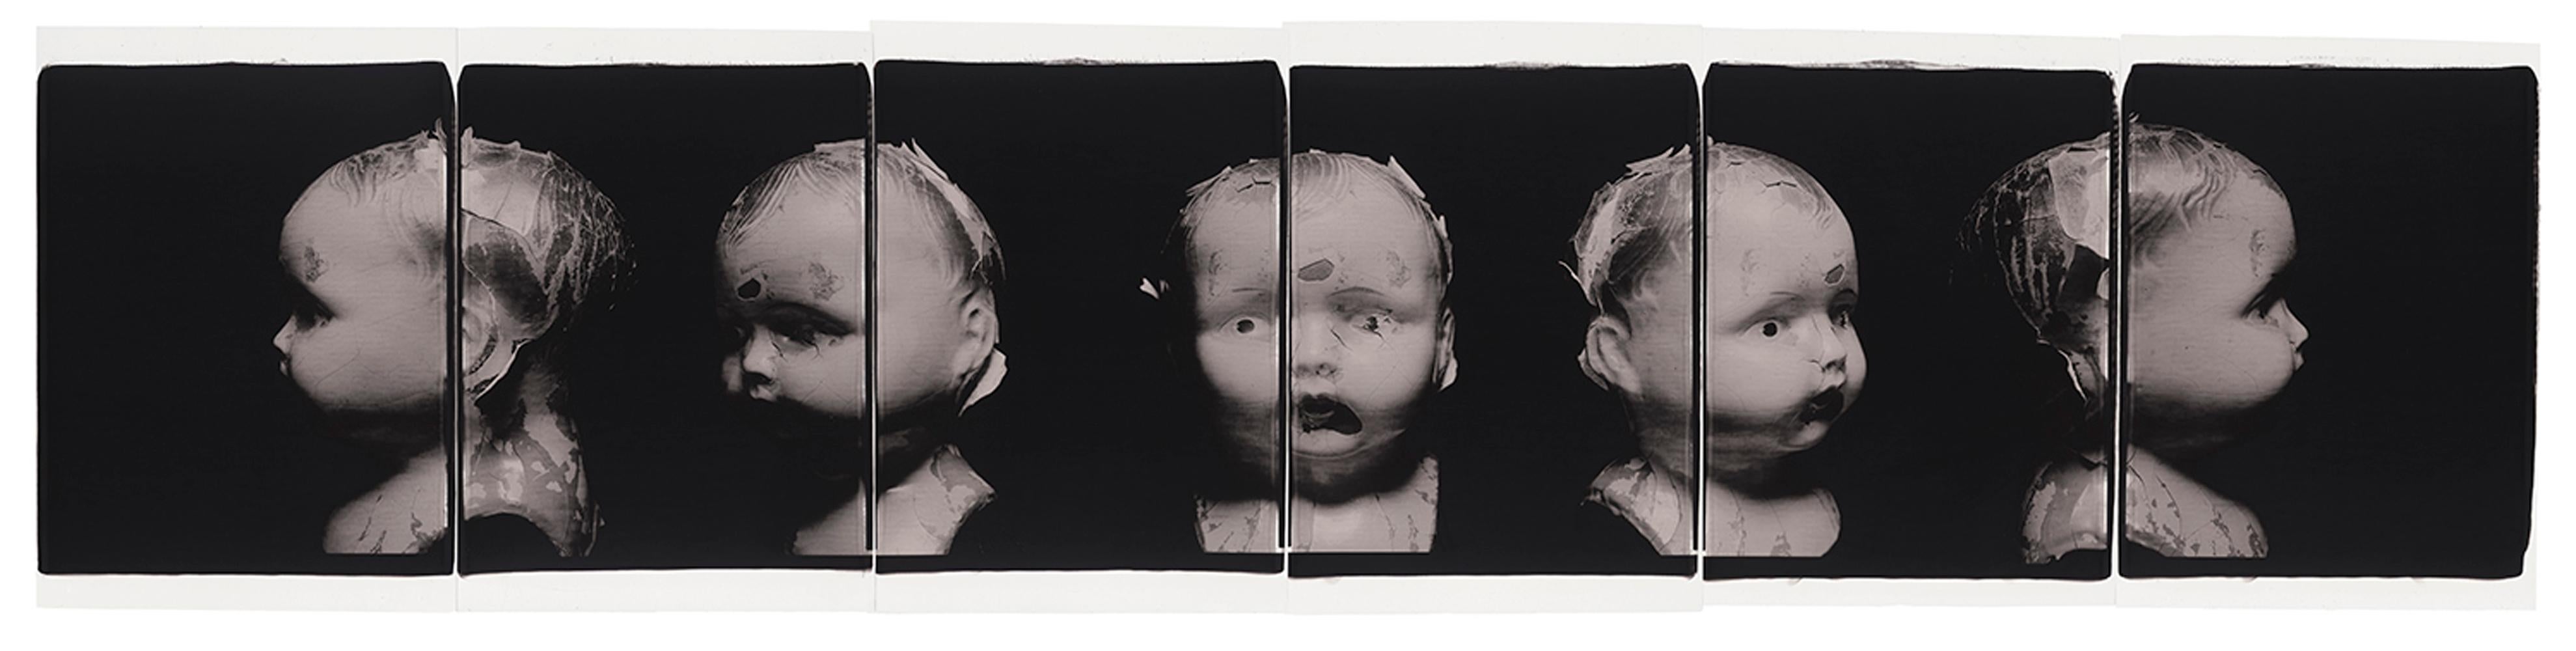 Jose Picayo Black and White Photograph - "Rotating Head", New York, NY, 1997